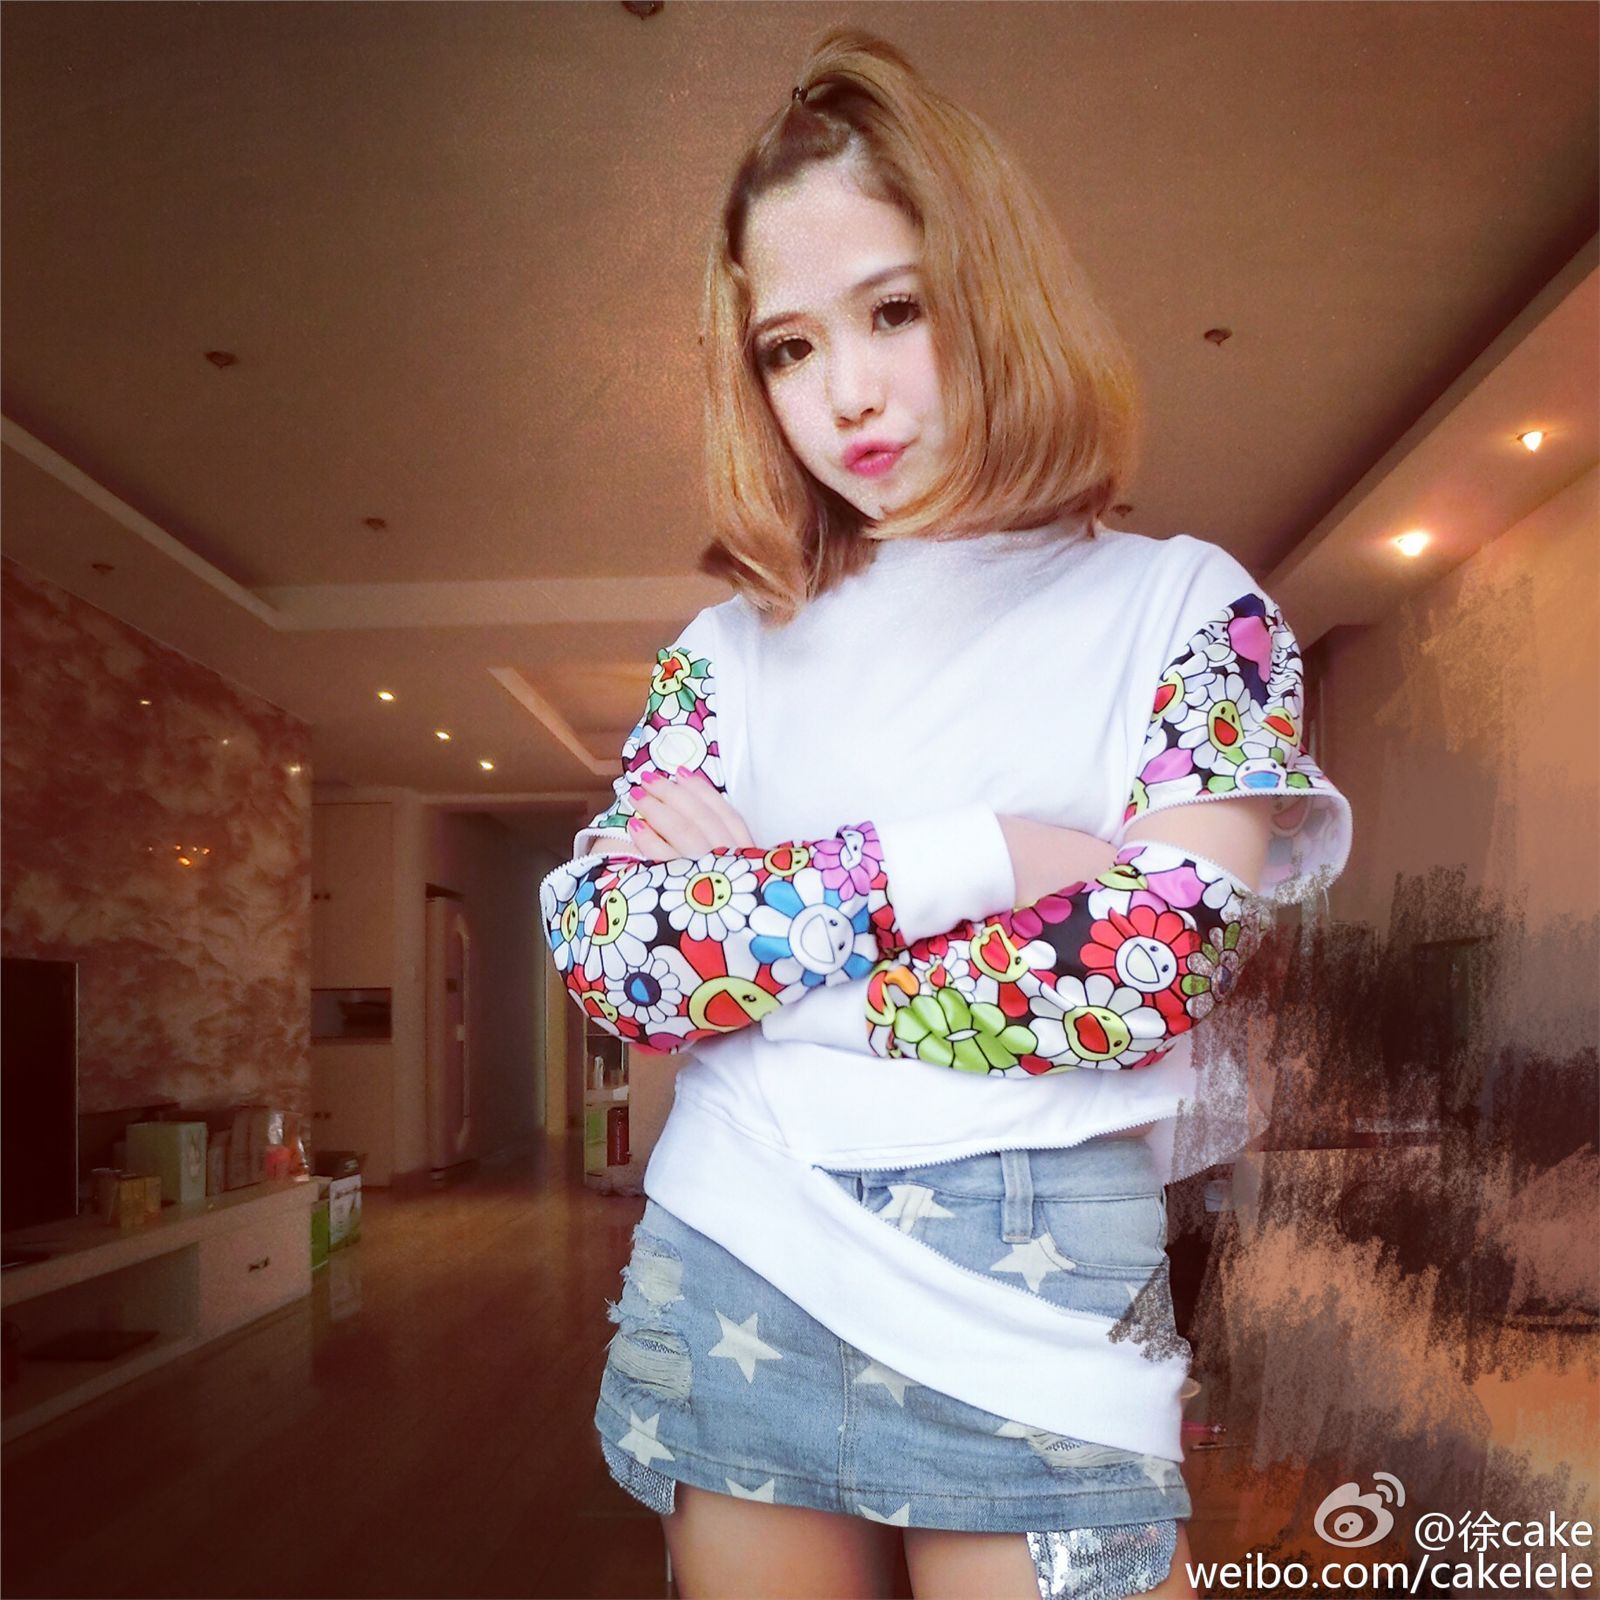 D cup's China joy model showgirl